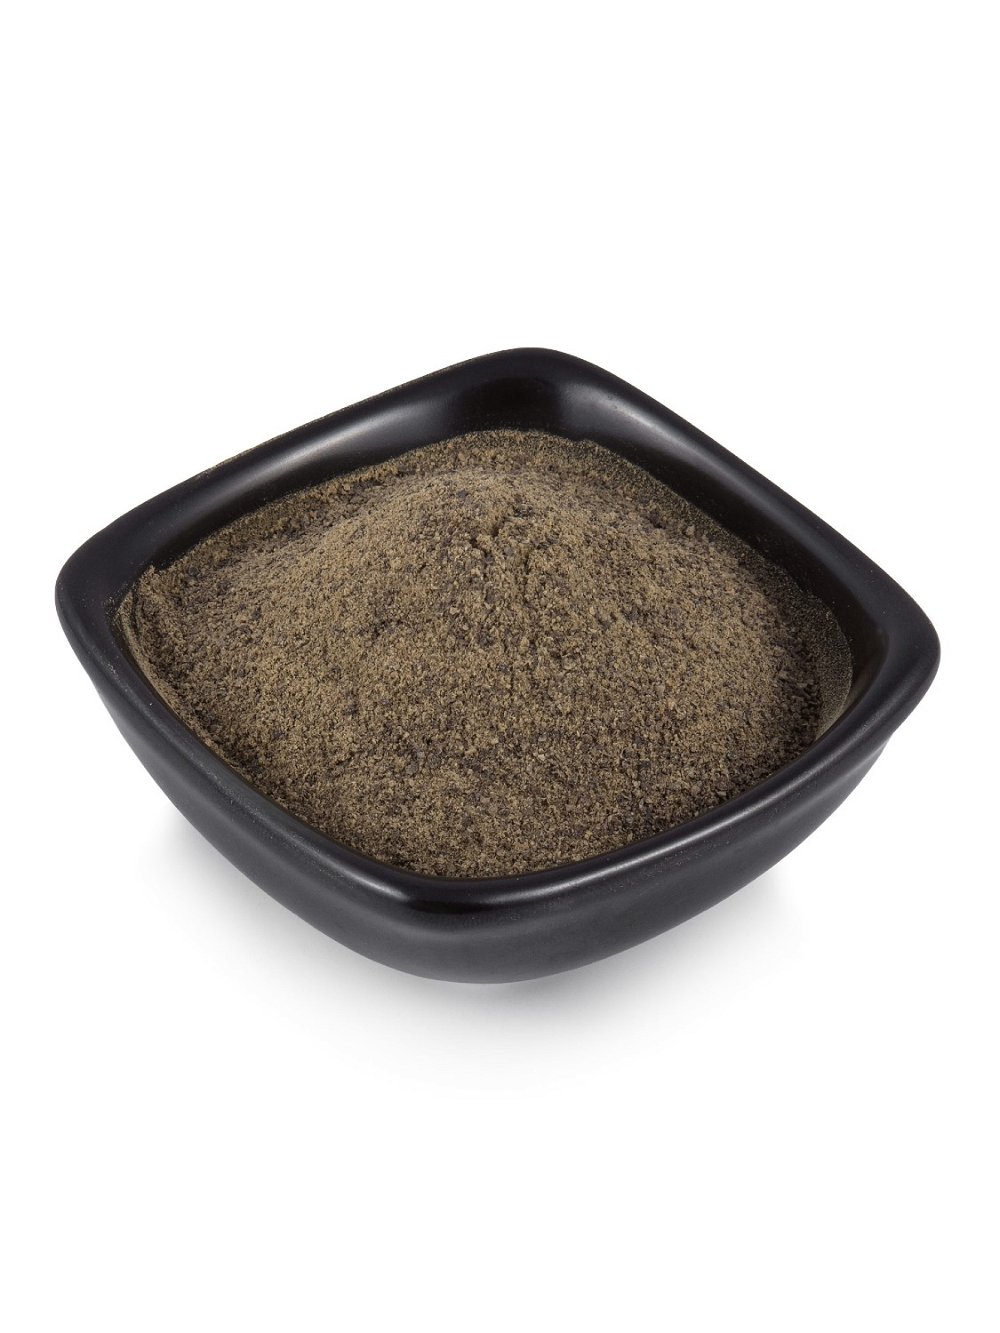 Черный перец молотый Sangam Herbals (90 г), Черный перец молотый 90г